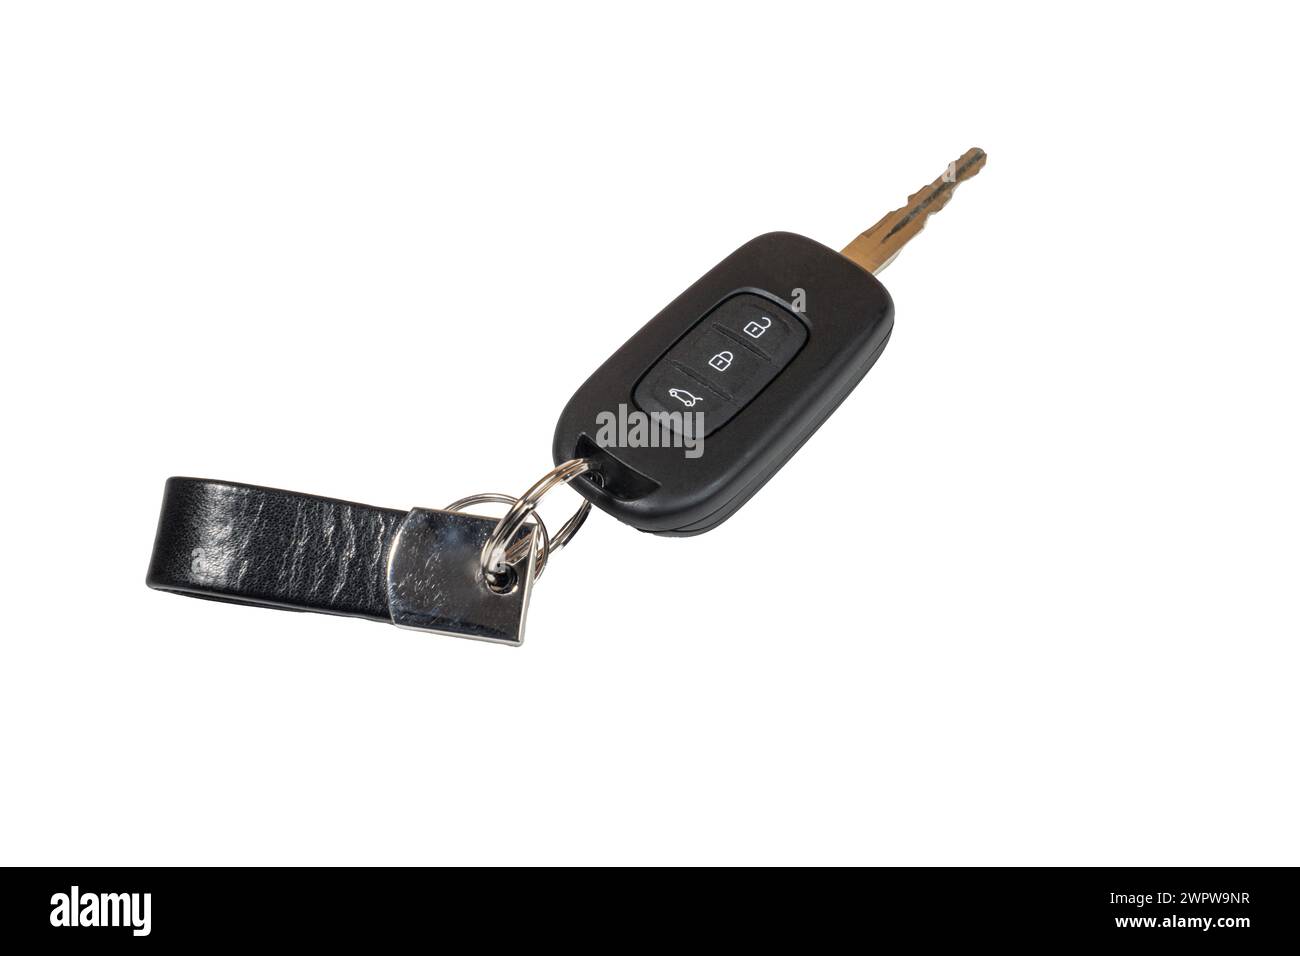 a car key on a transparent background Stock Photo